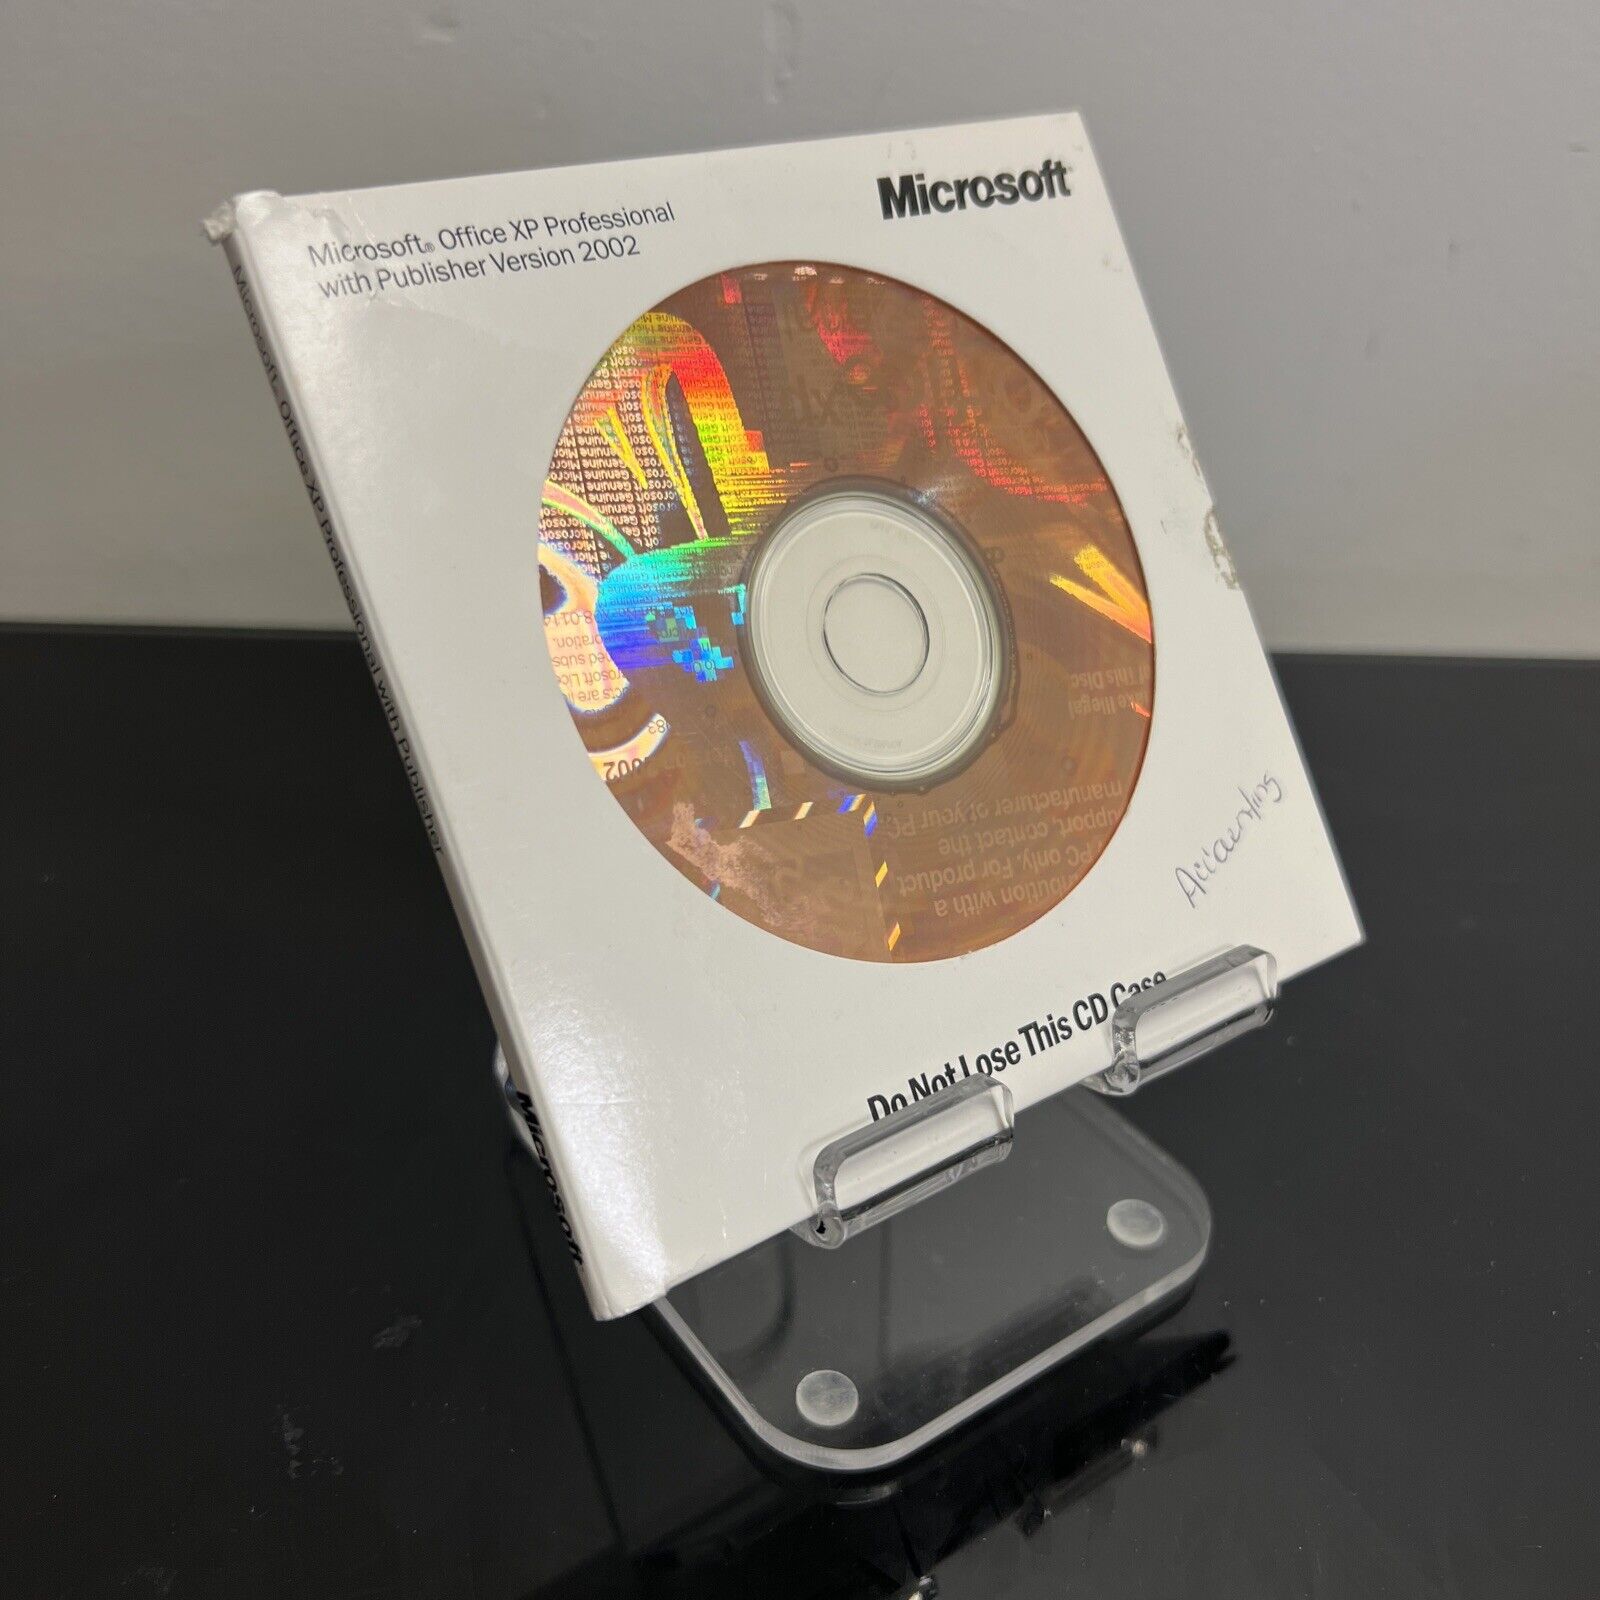 Microsoft-Office XP Professional 2002-W/Publisher 2002 3 Discs w/Product Key